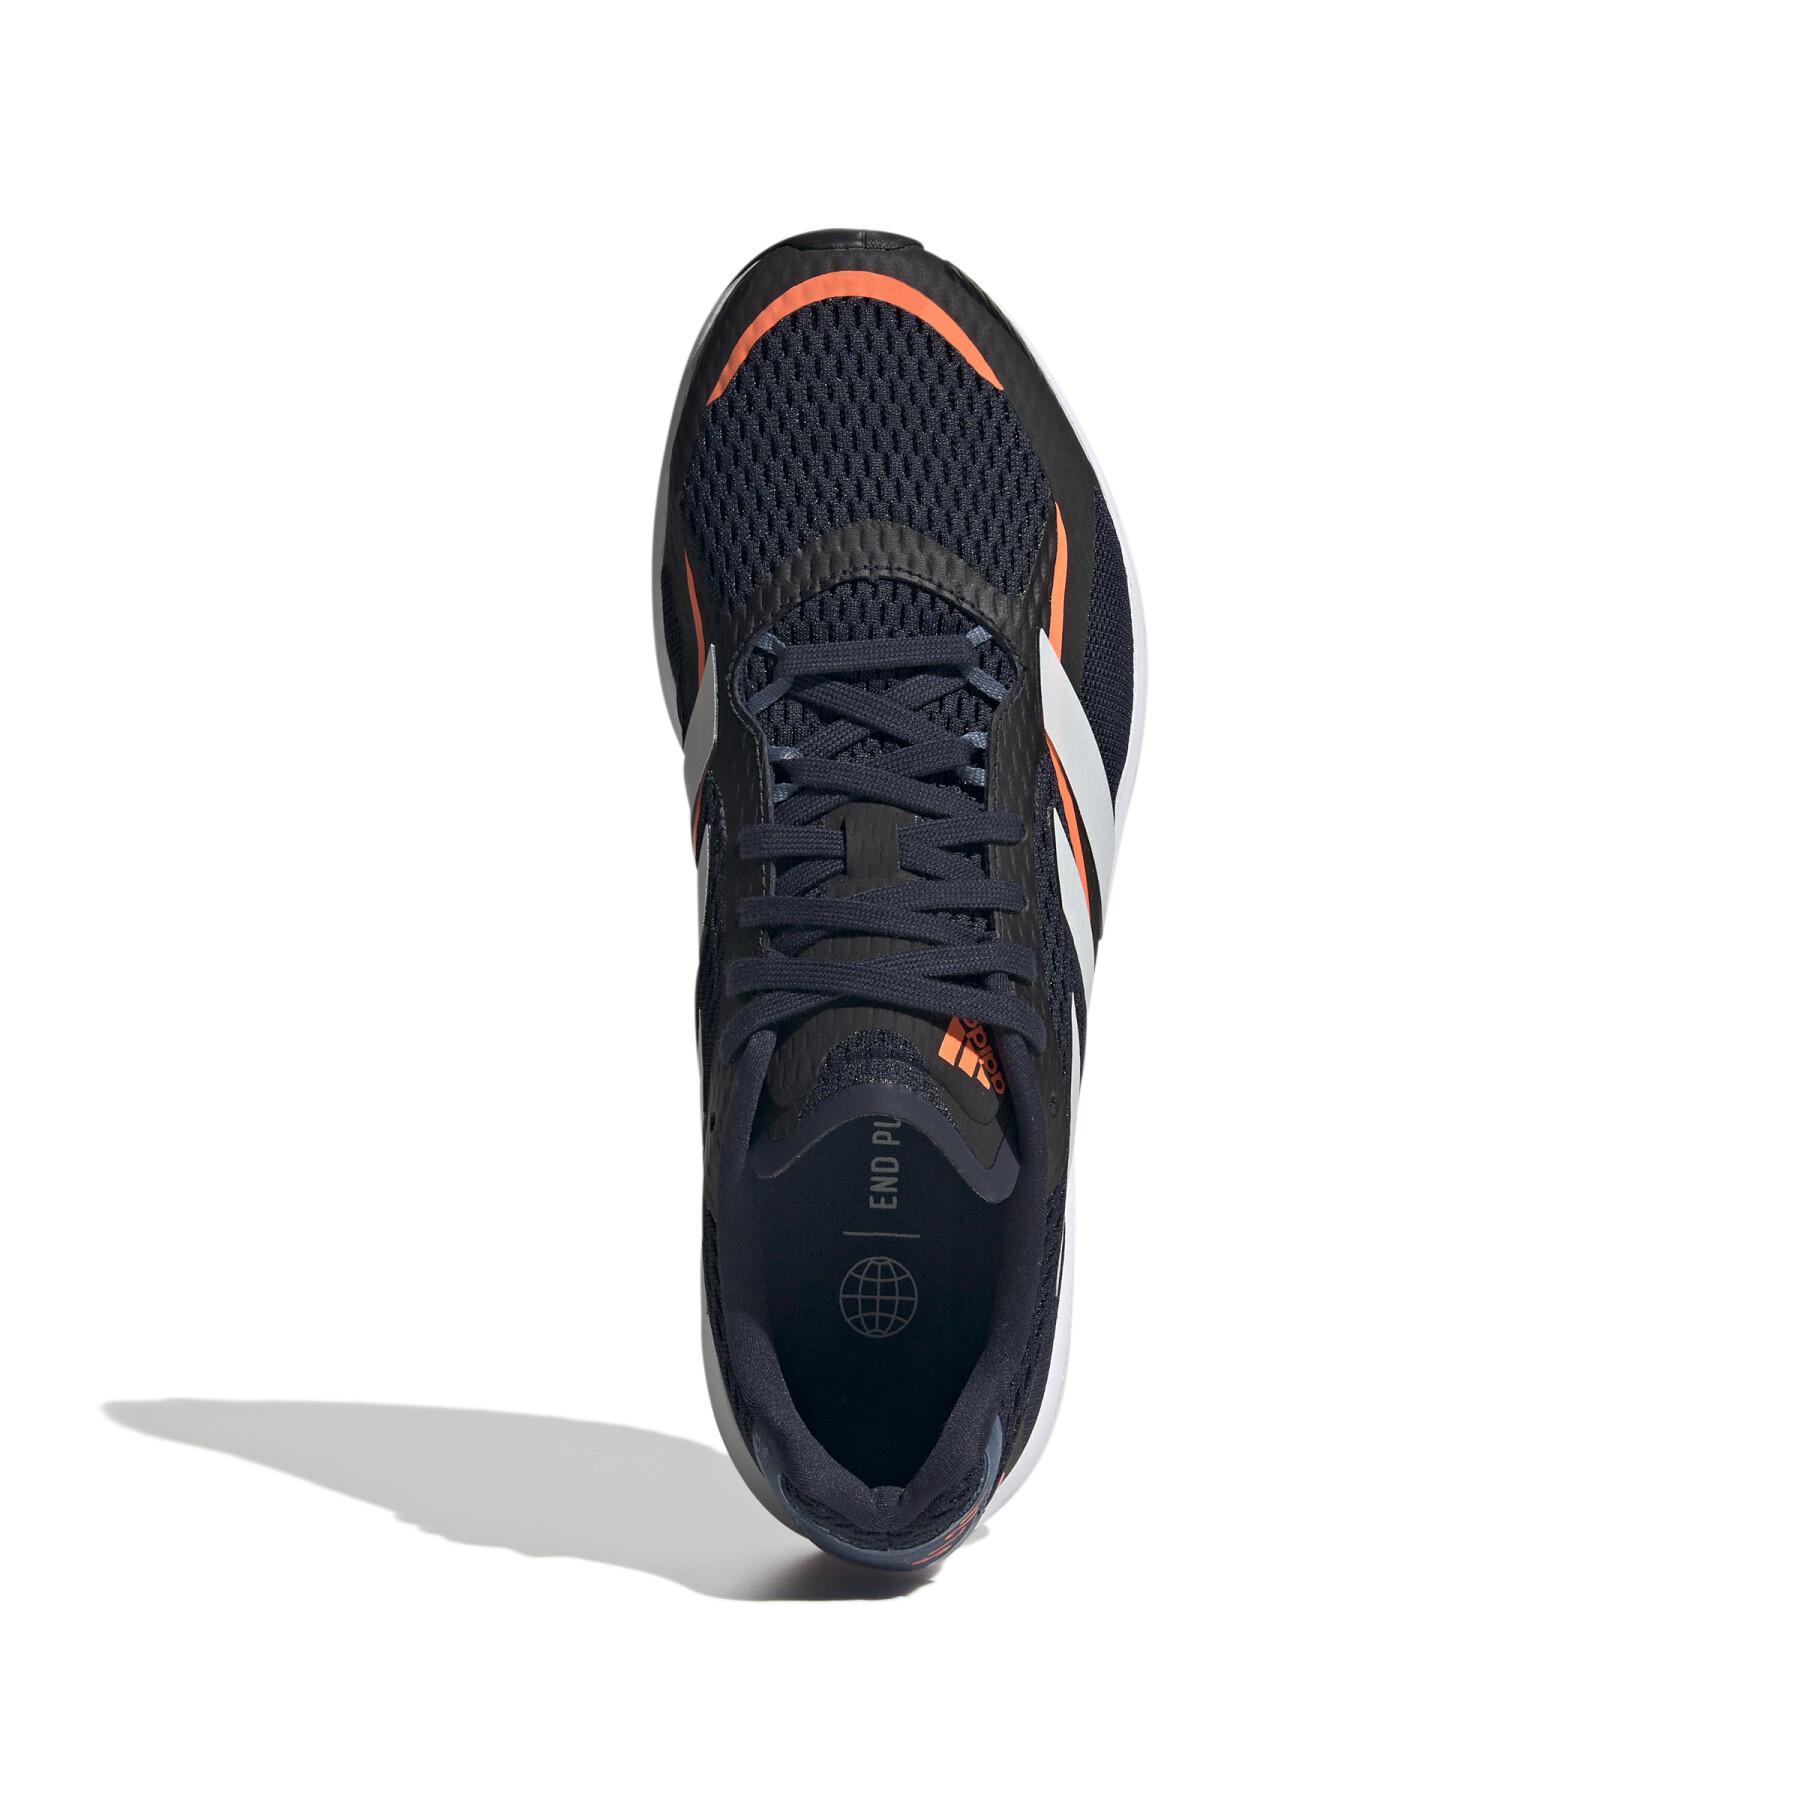 Chaussures de running adidas SL20.3